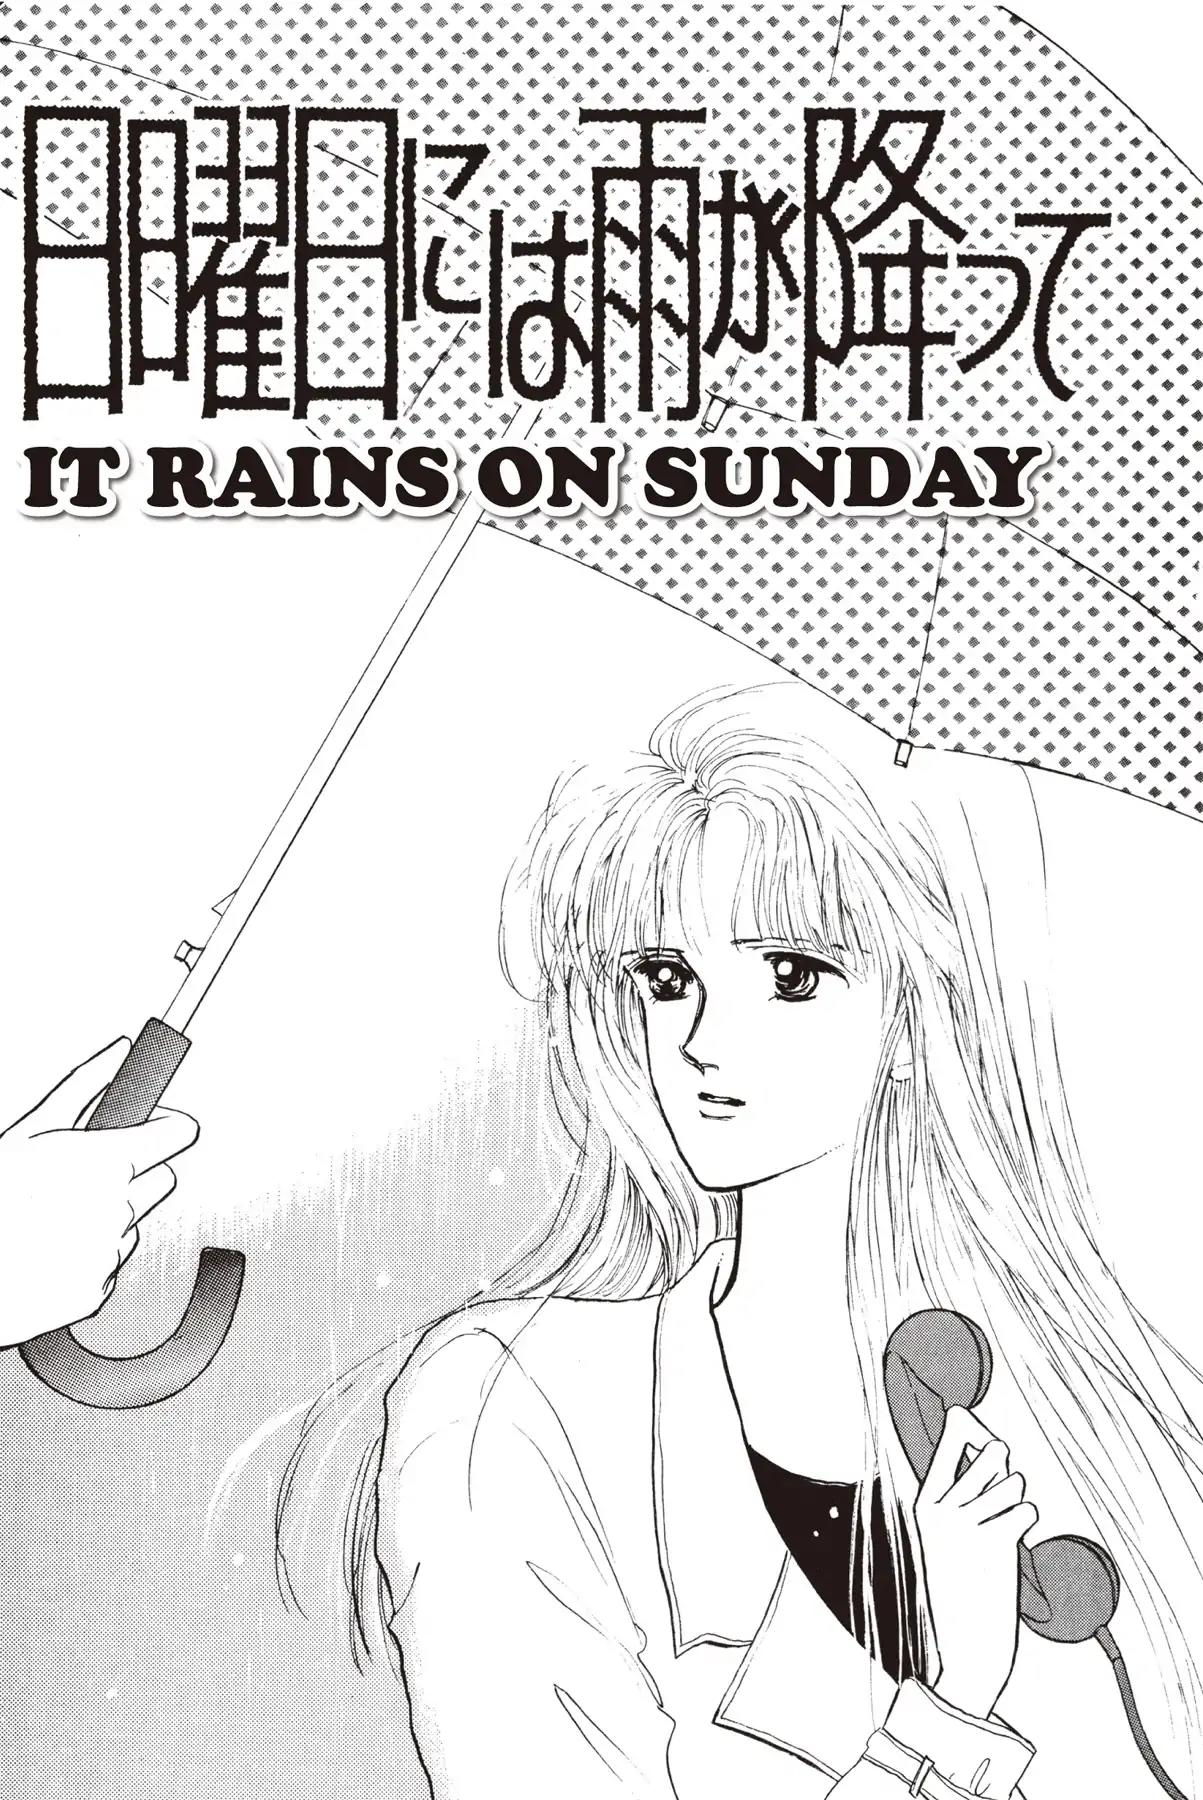 Kyoko Shimazu Author's Edition Vol.2 It Rains On Sunday